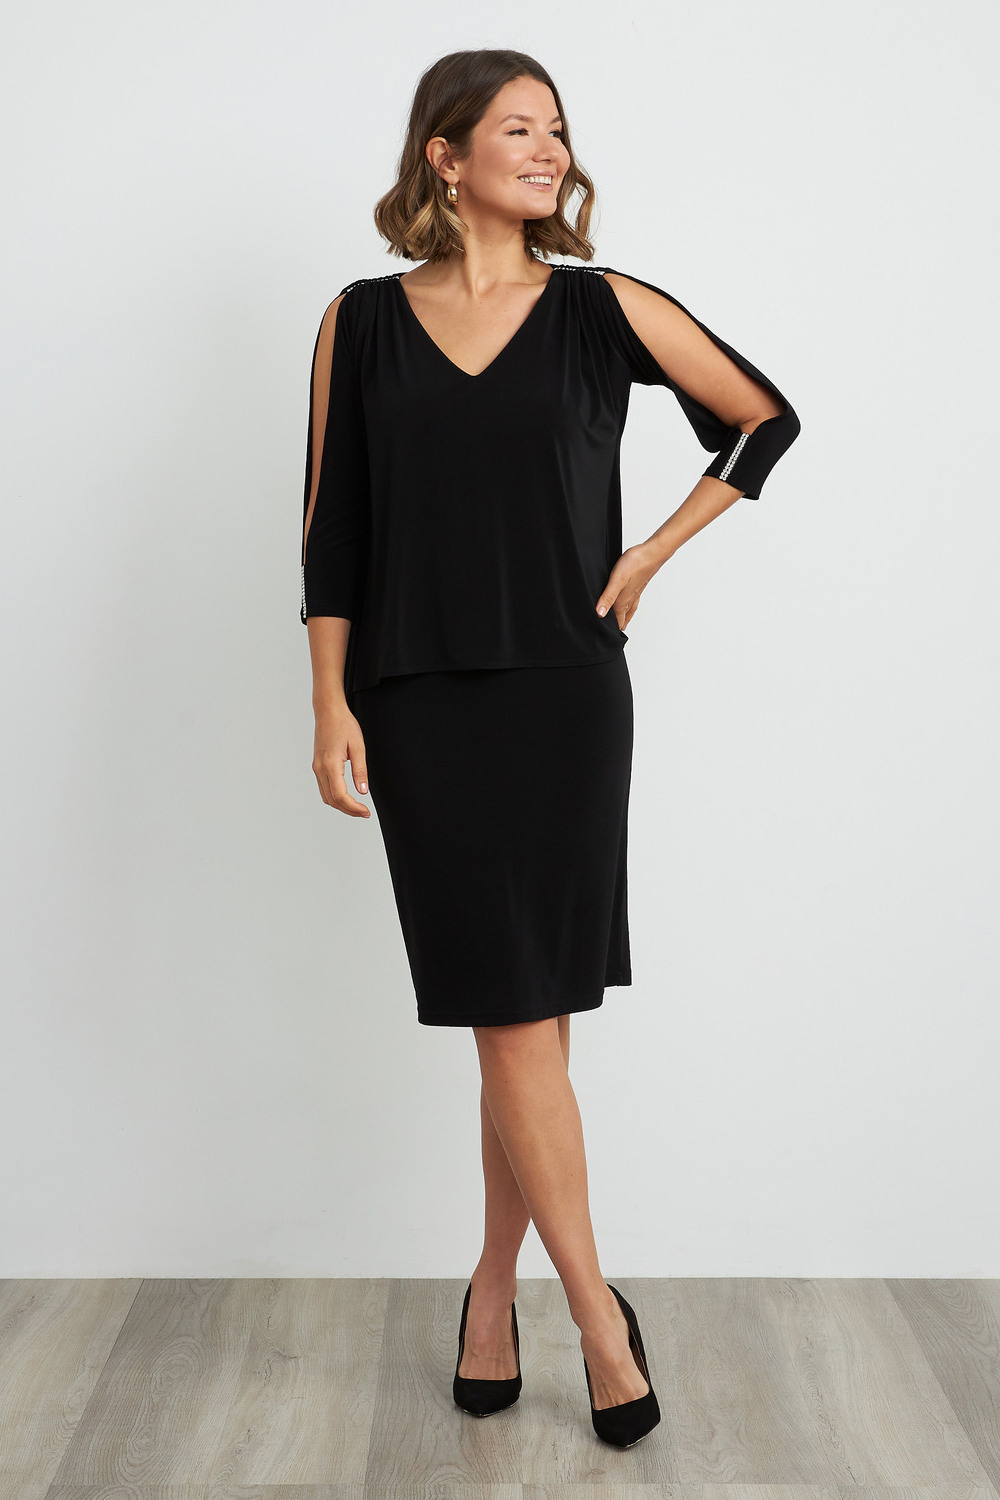 Joseph Ribkoff V-neck Dress Style 204109. Black